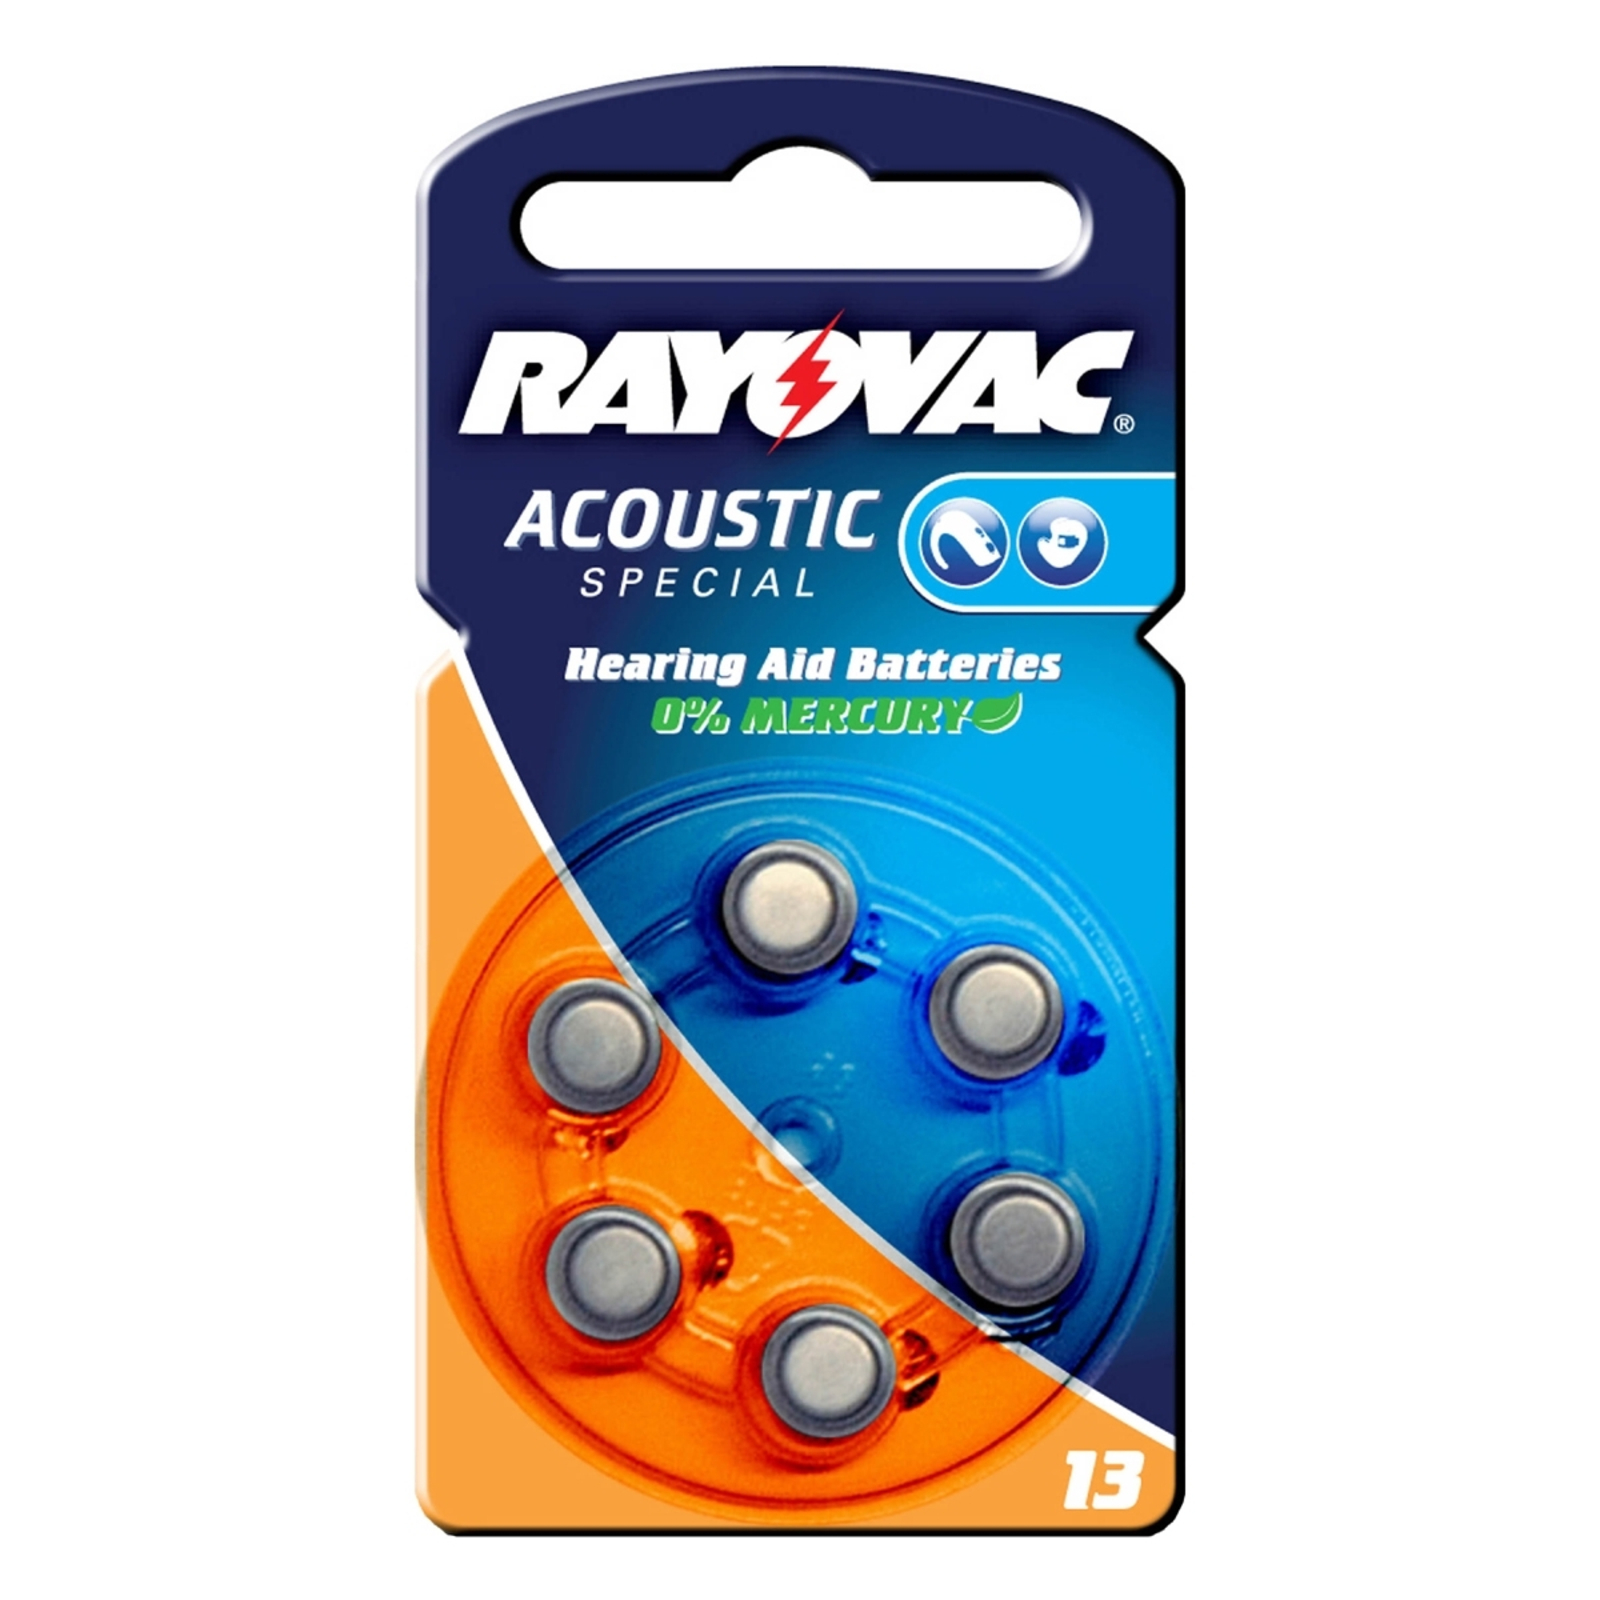 Acoustic 1,4V, 310m/Ah knappcelle Rayovac 13